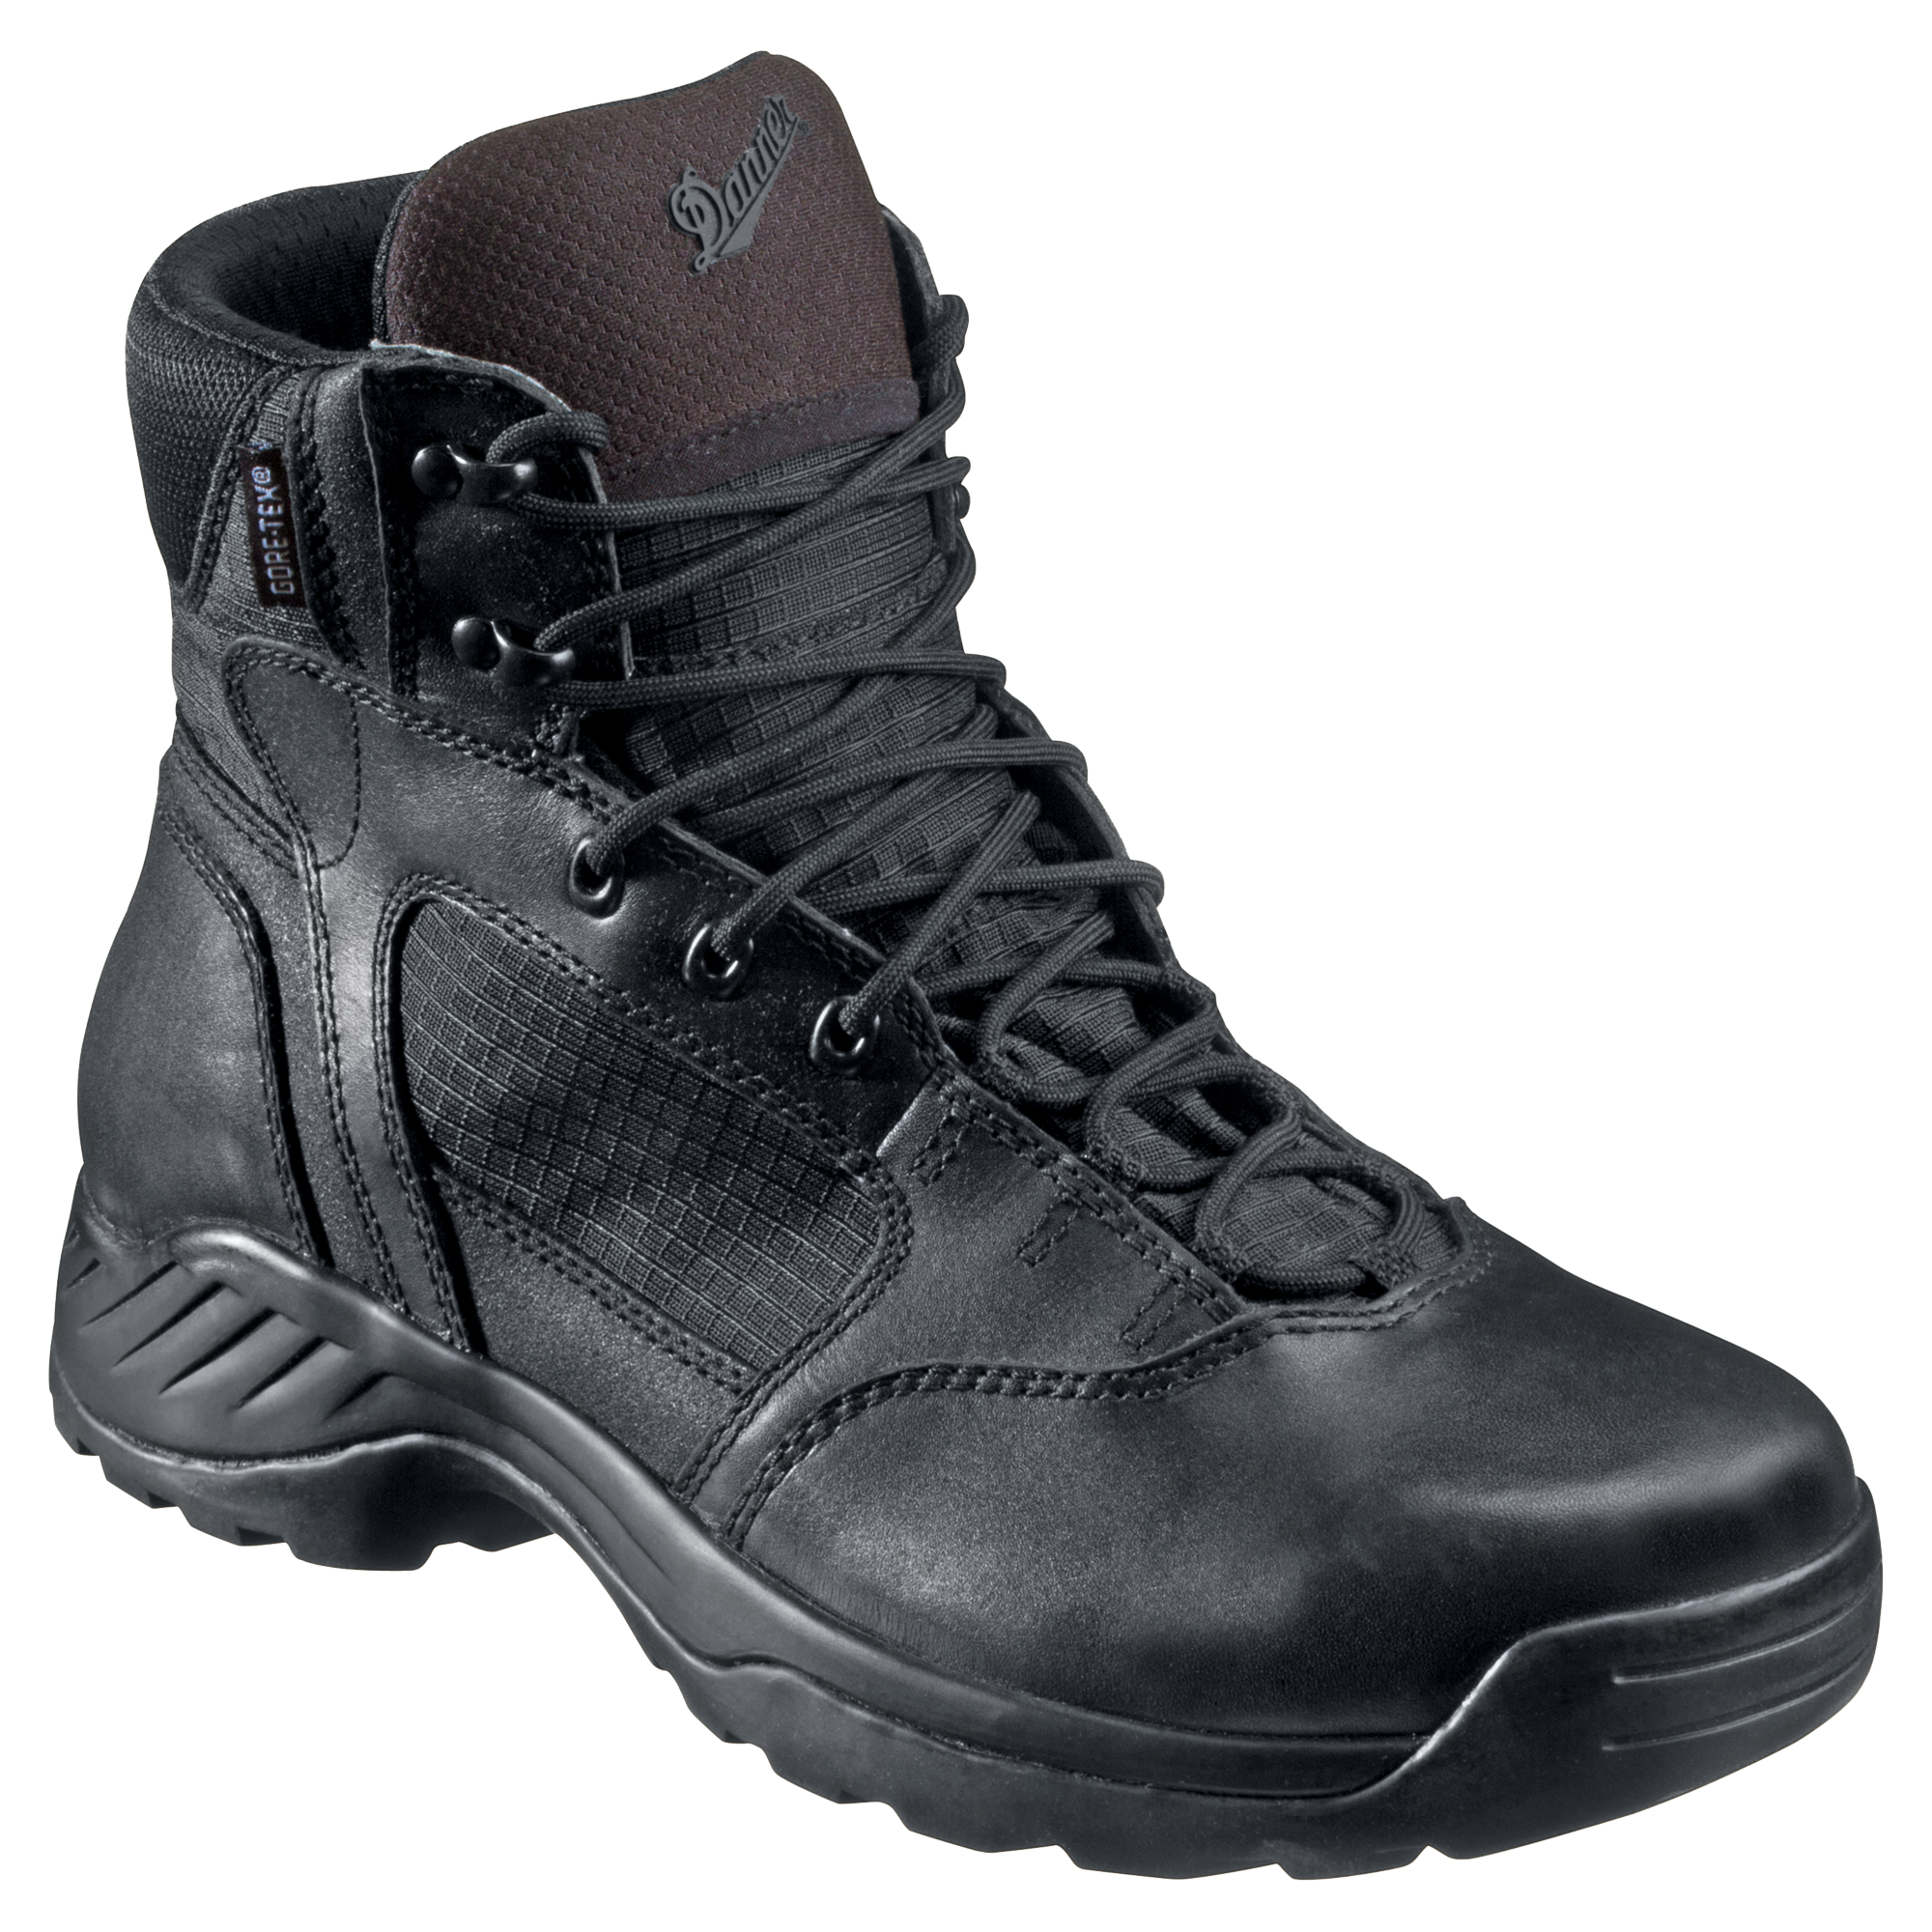 Danner Kinetic Side-Zip GORE-TEX Work Boots for Men - Black - 13W